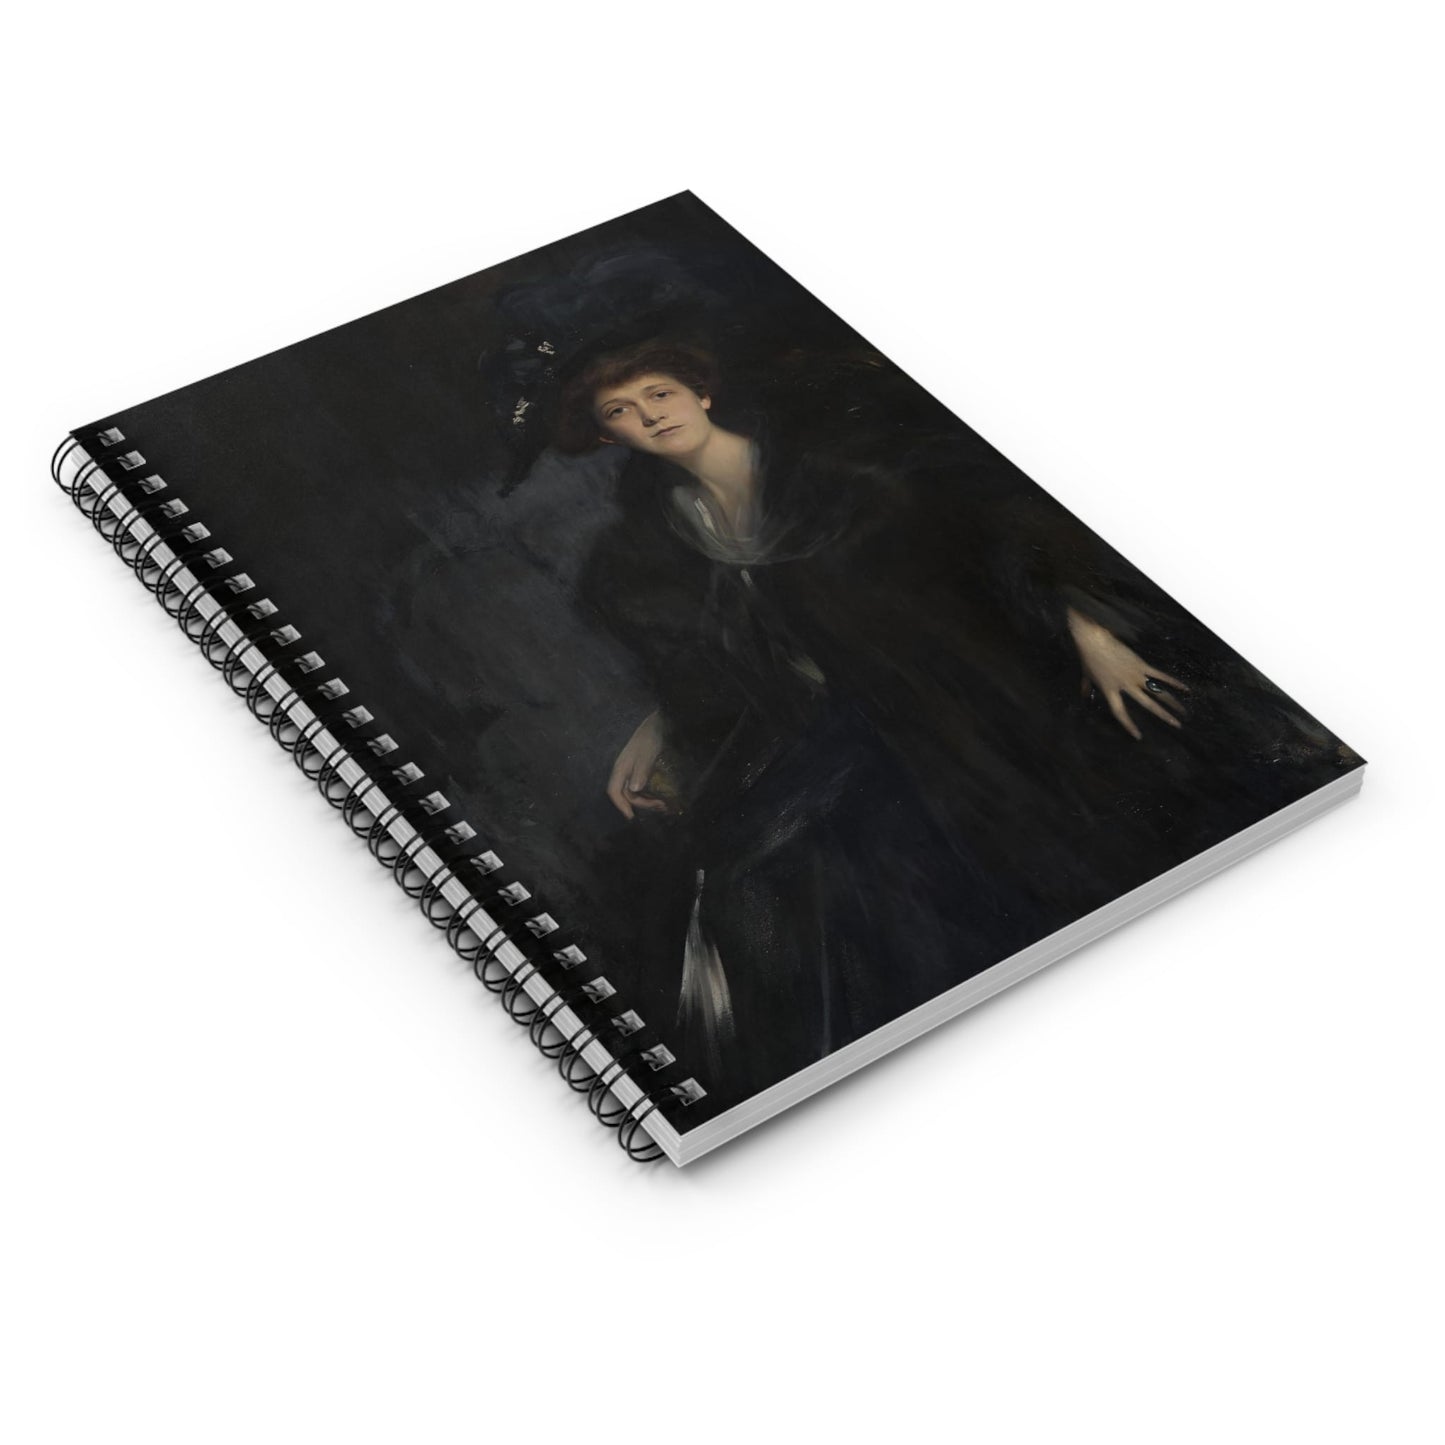 Dark Female Portrait Spiral Notebook Laying Flat on White Surface